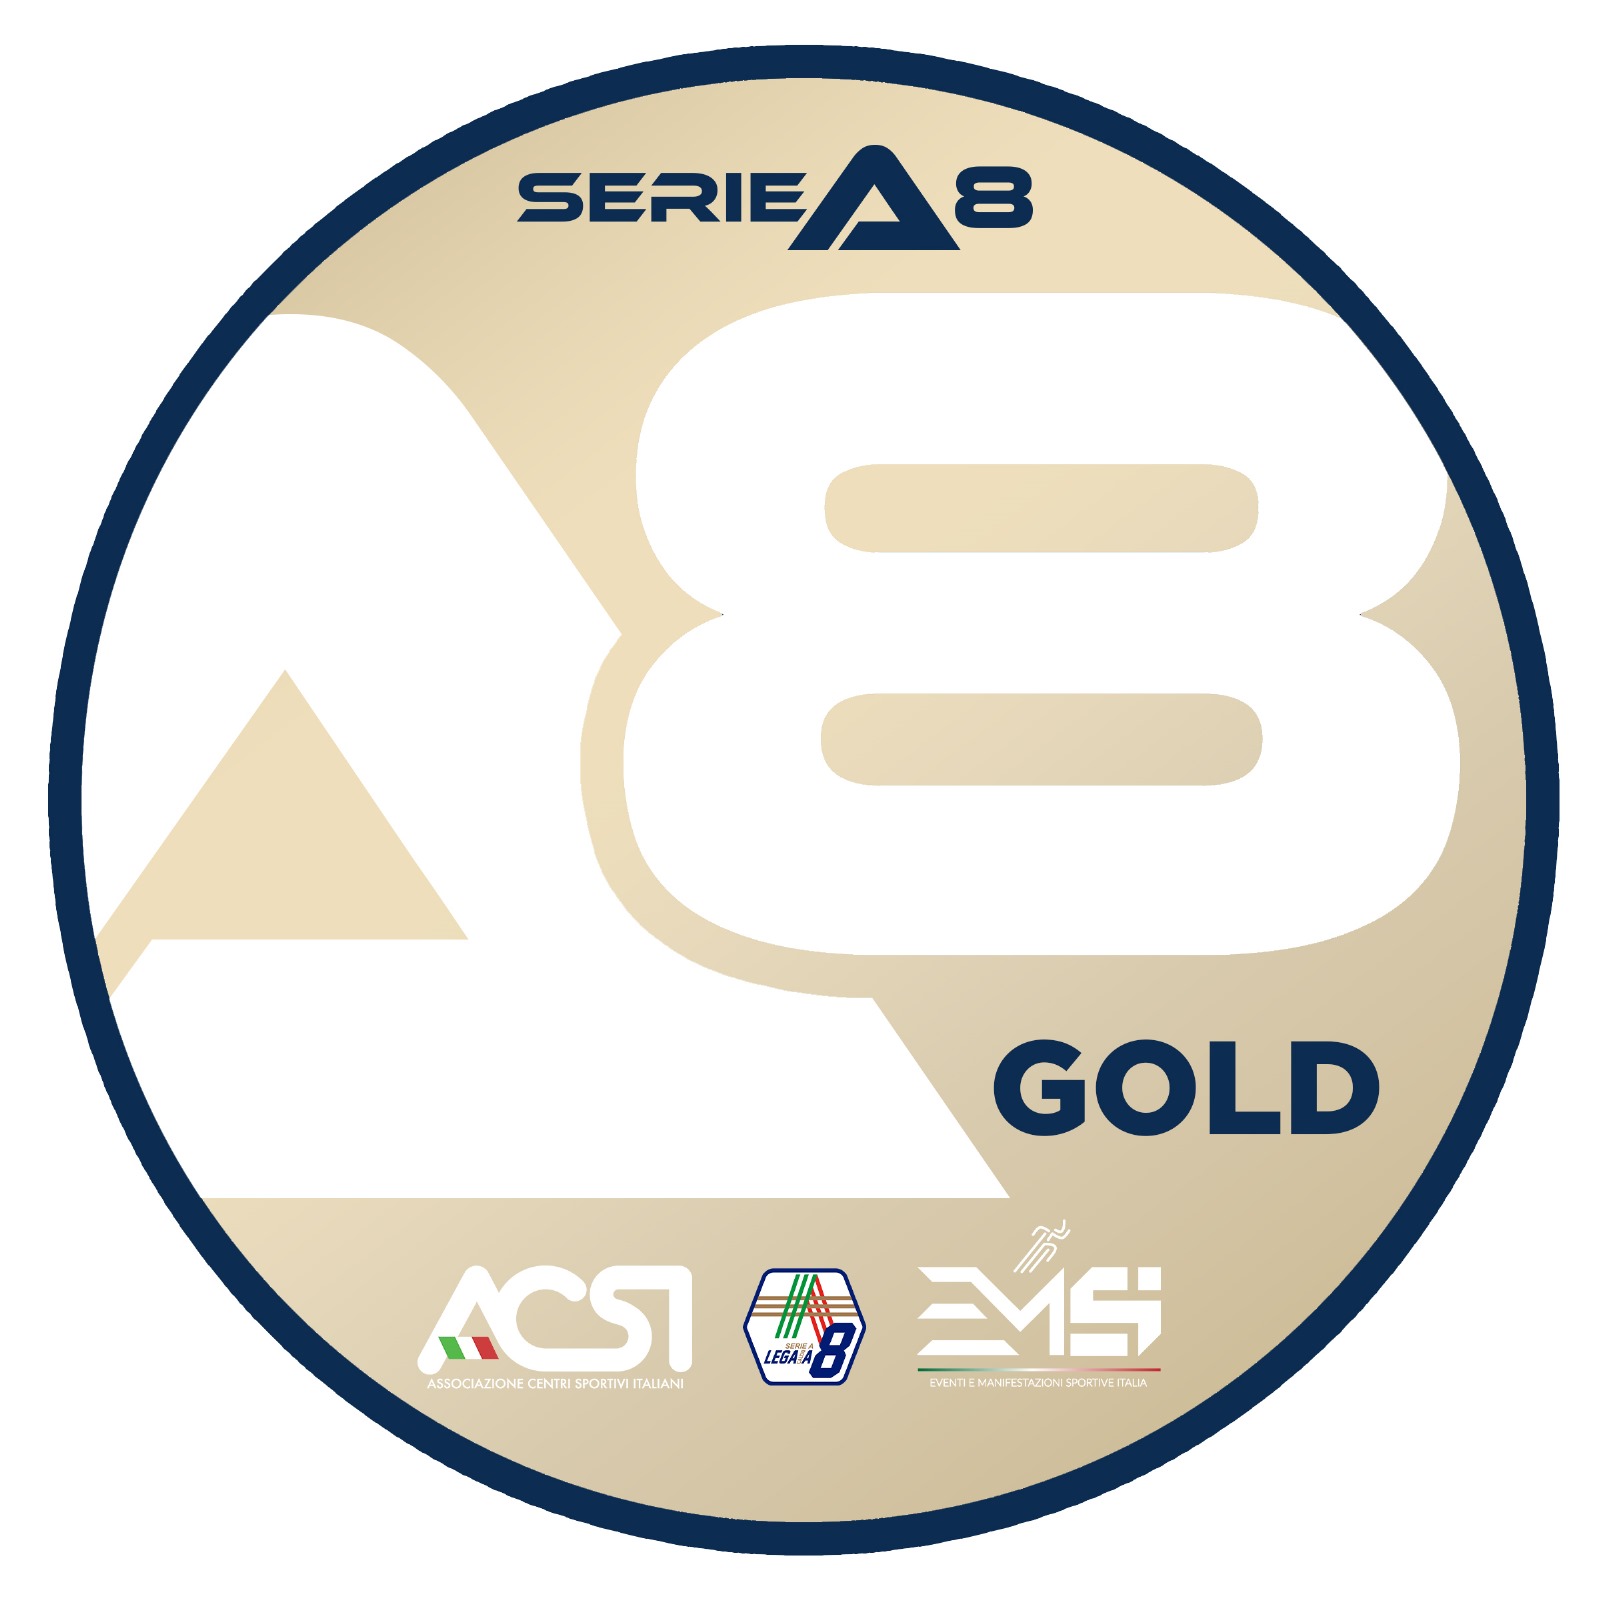 Serie A8 Gold